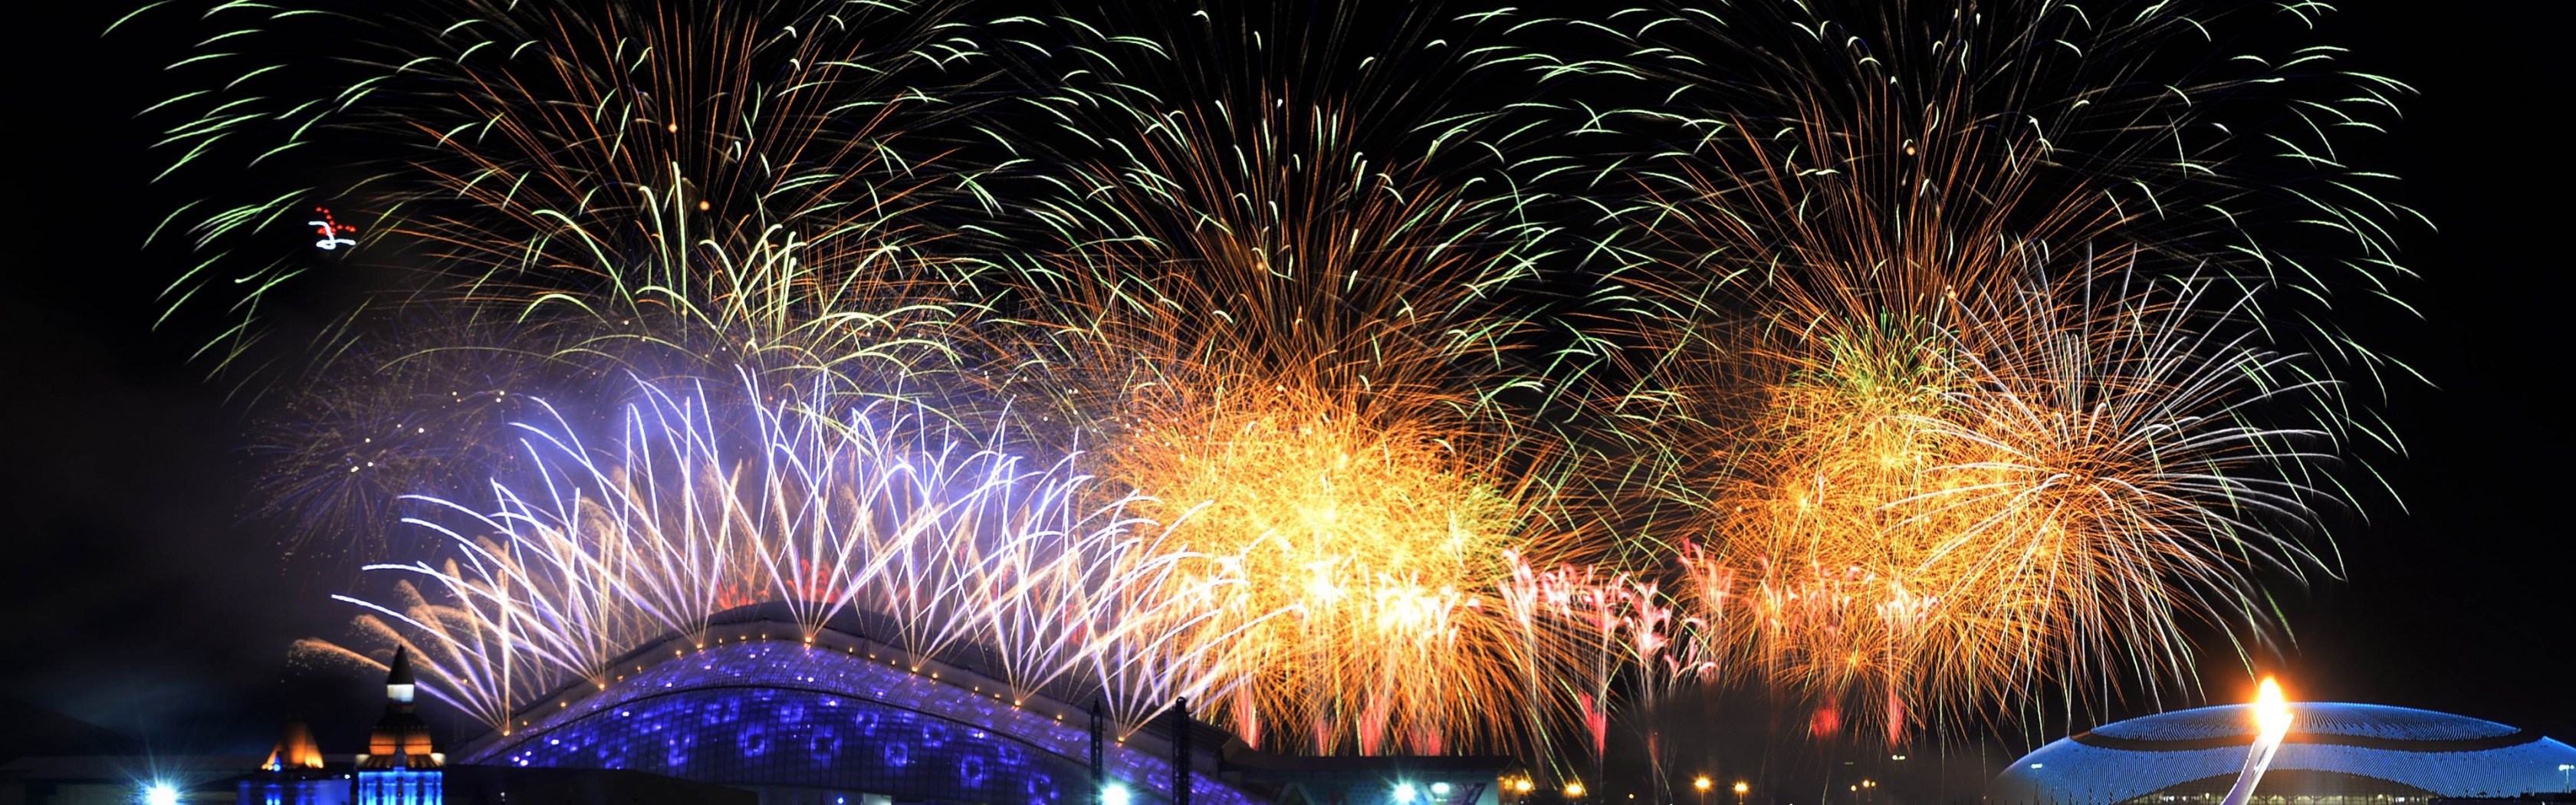 Fireworks Winter Olympics Sochi 2014